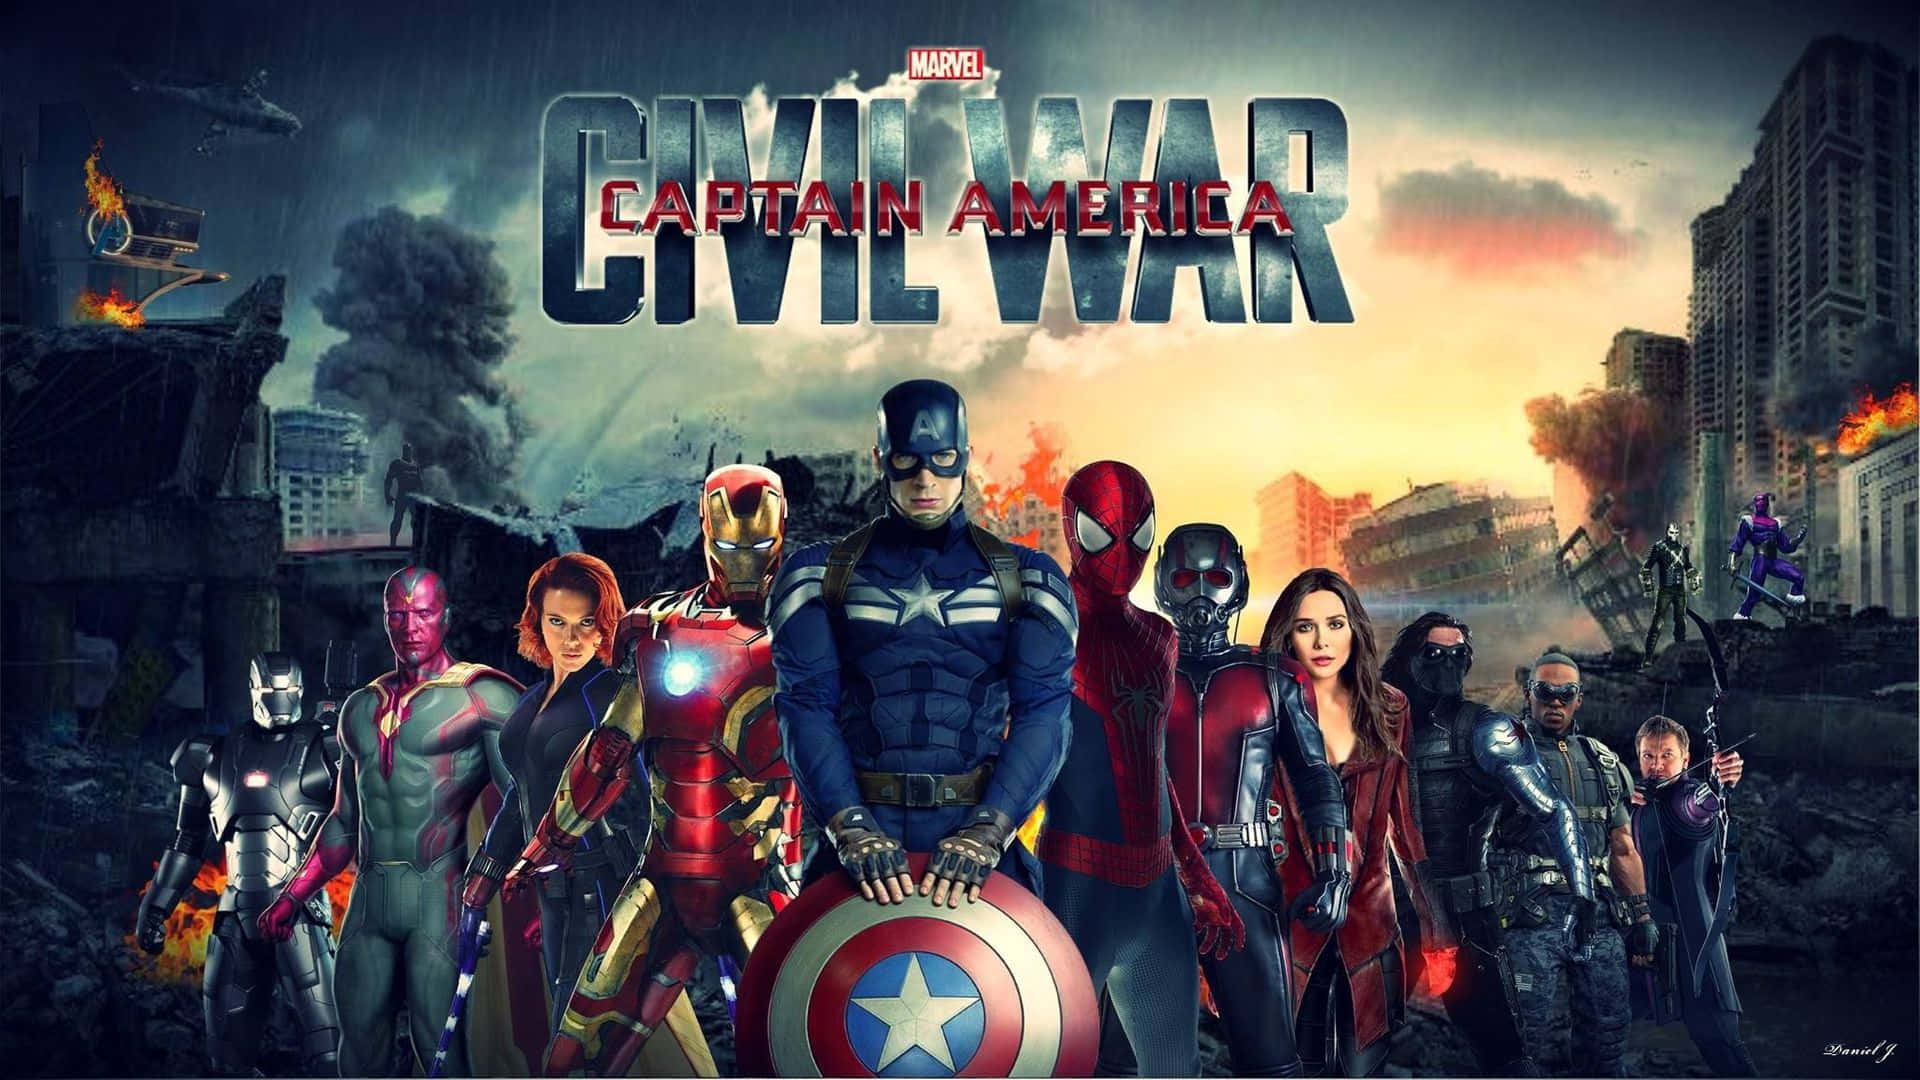 Featuring Chris Evans as Captain America Wallpaper